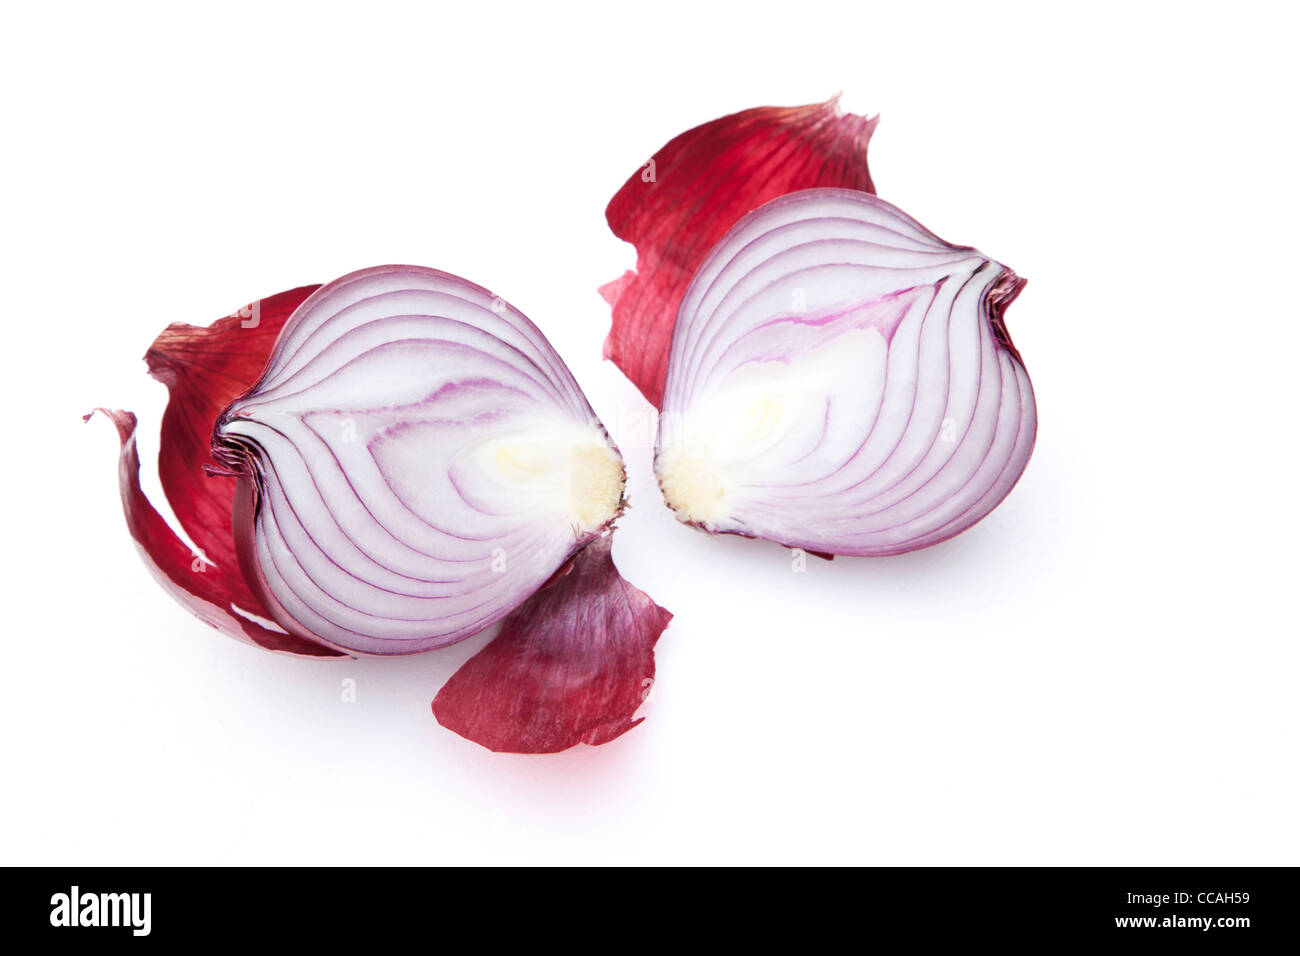 Red Onion Halves Stock Photo